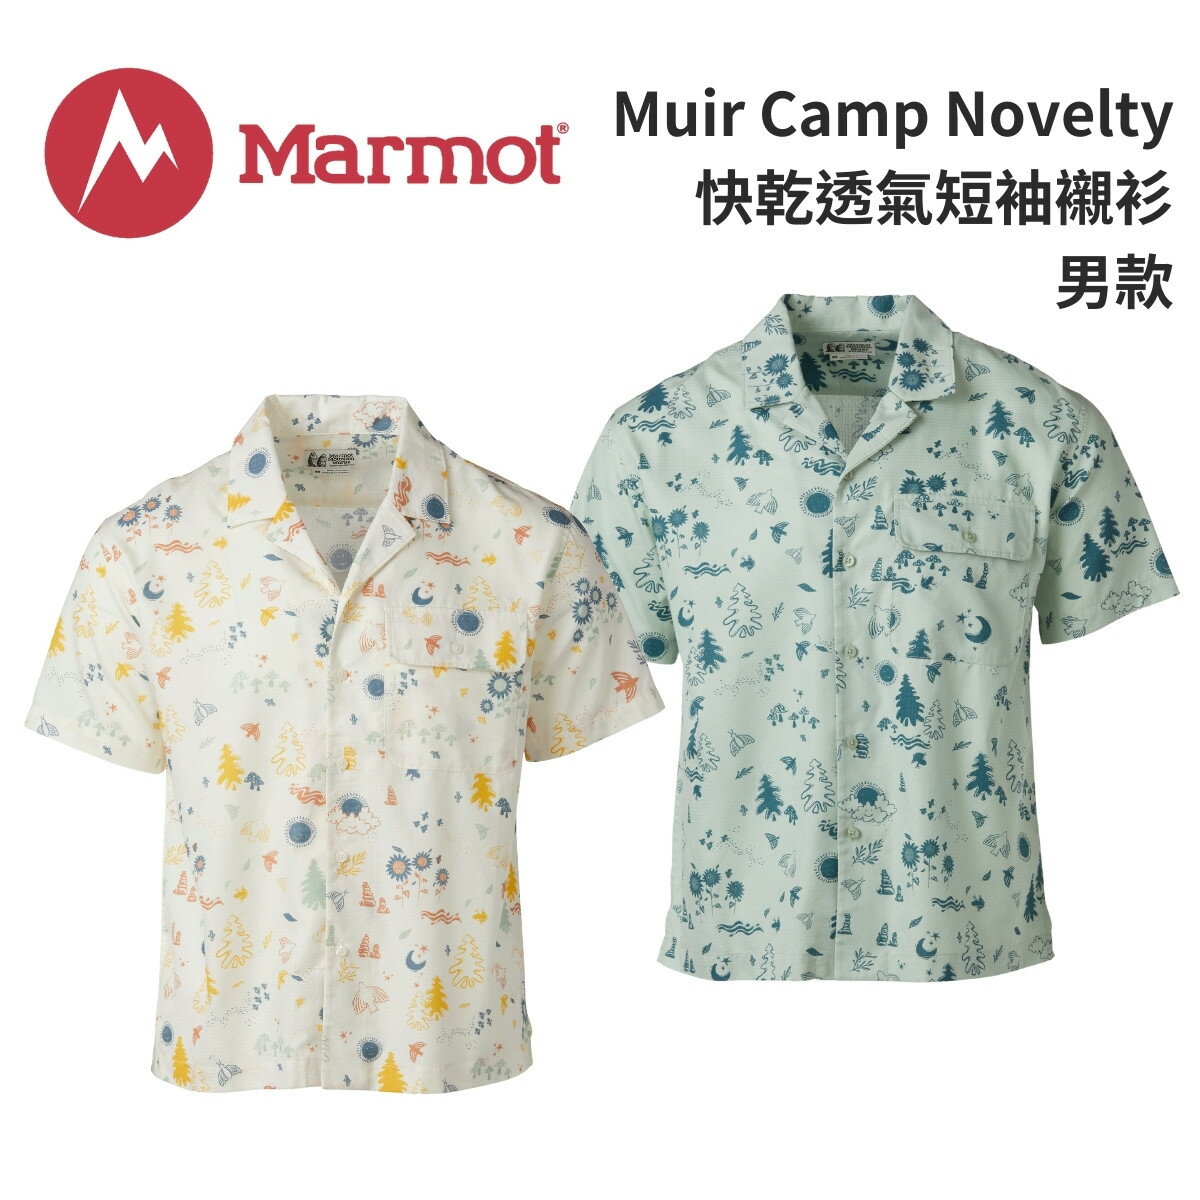 【Marmot】Muir Camp Novelty 男款 快乾透氣短袖襯衫